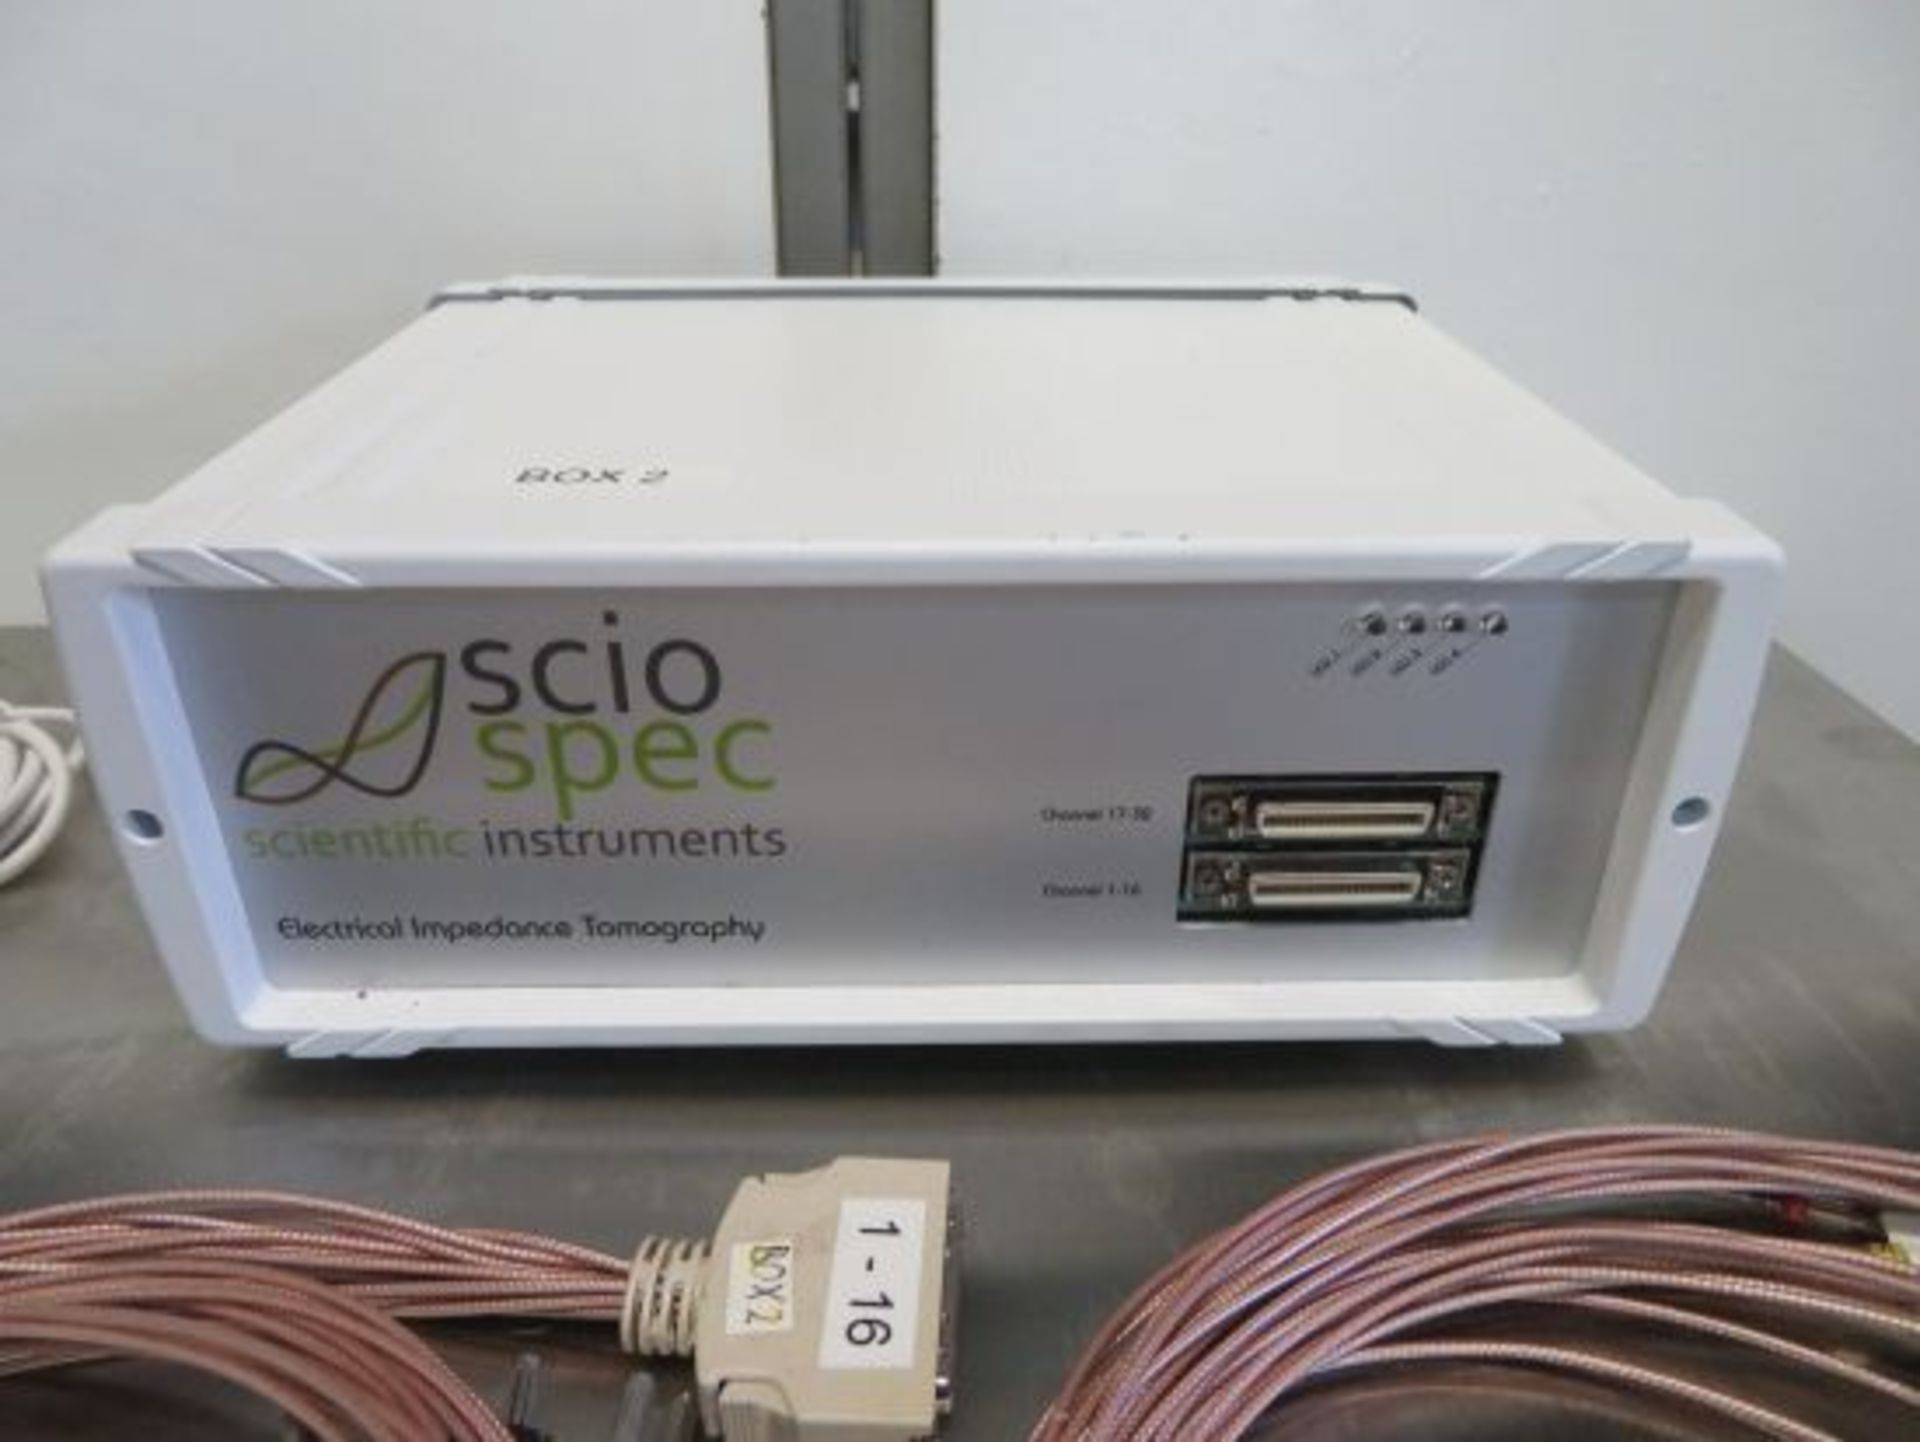 Scio Spec Scientific Instruments Electrical Impedance Tomography (E.I.T) Unit, Serial No 01-0019- - Image 3 of 3